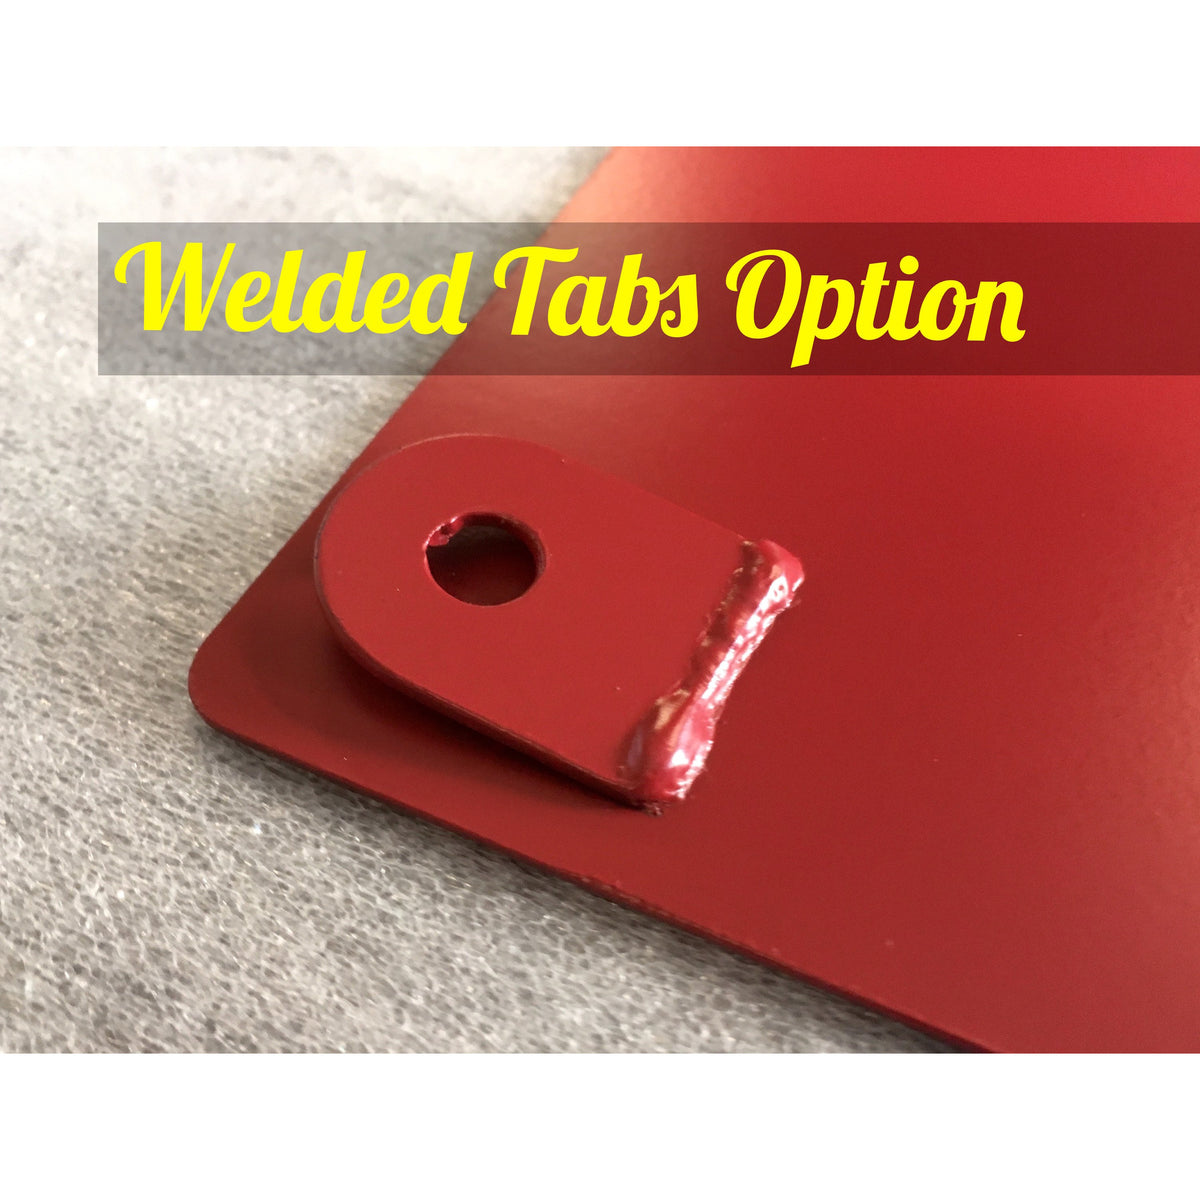 welded tabs option